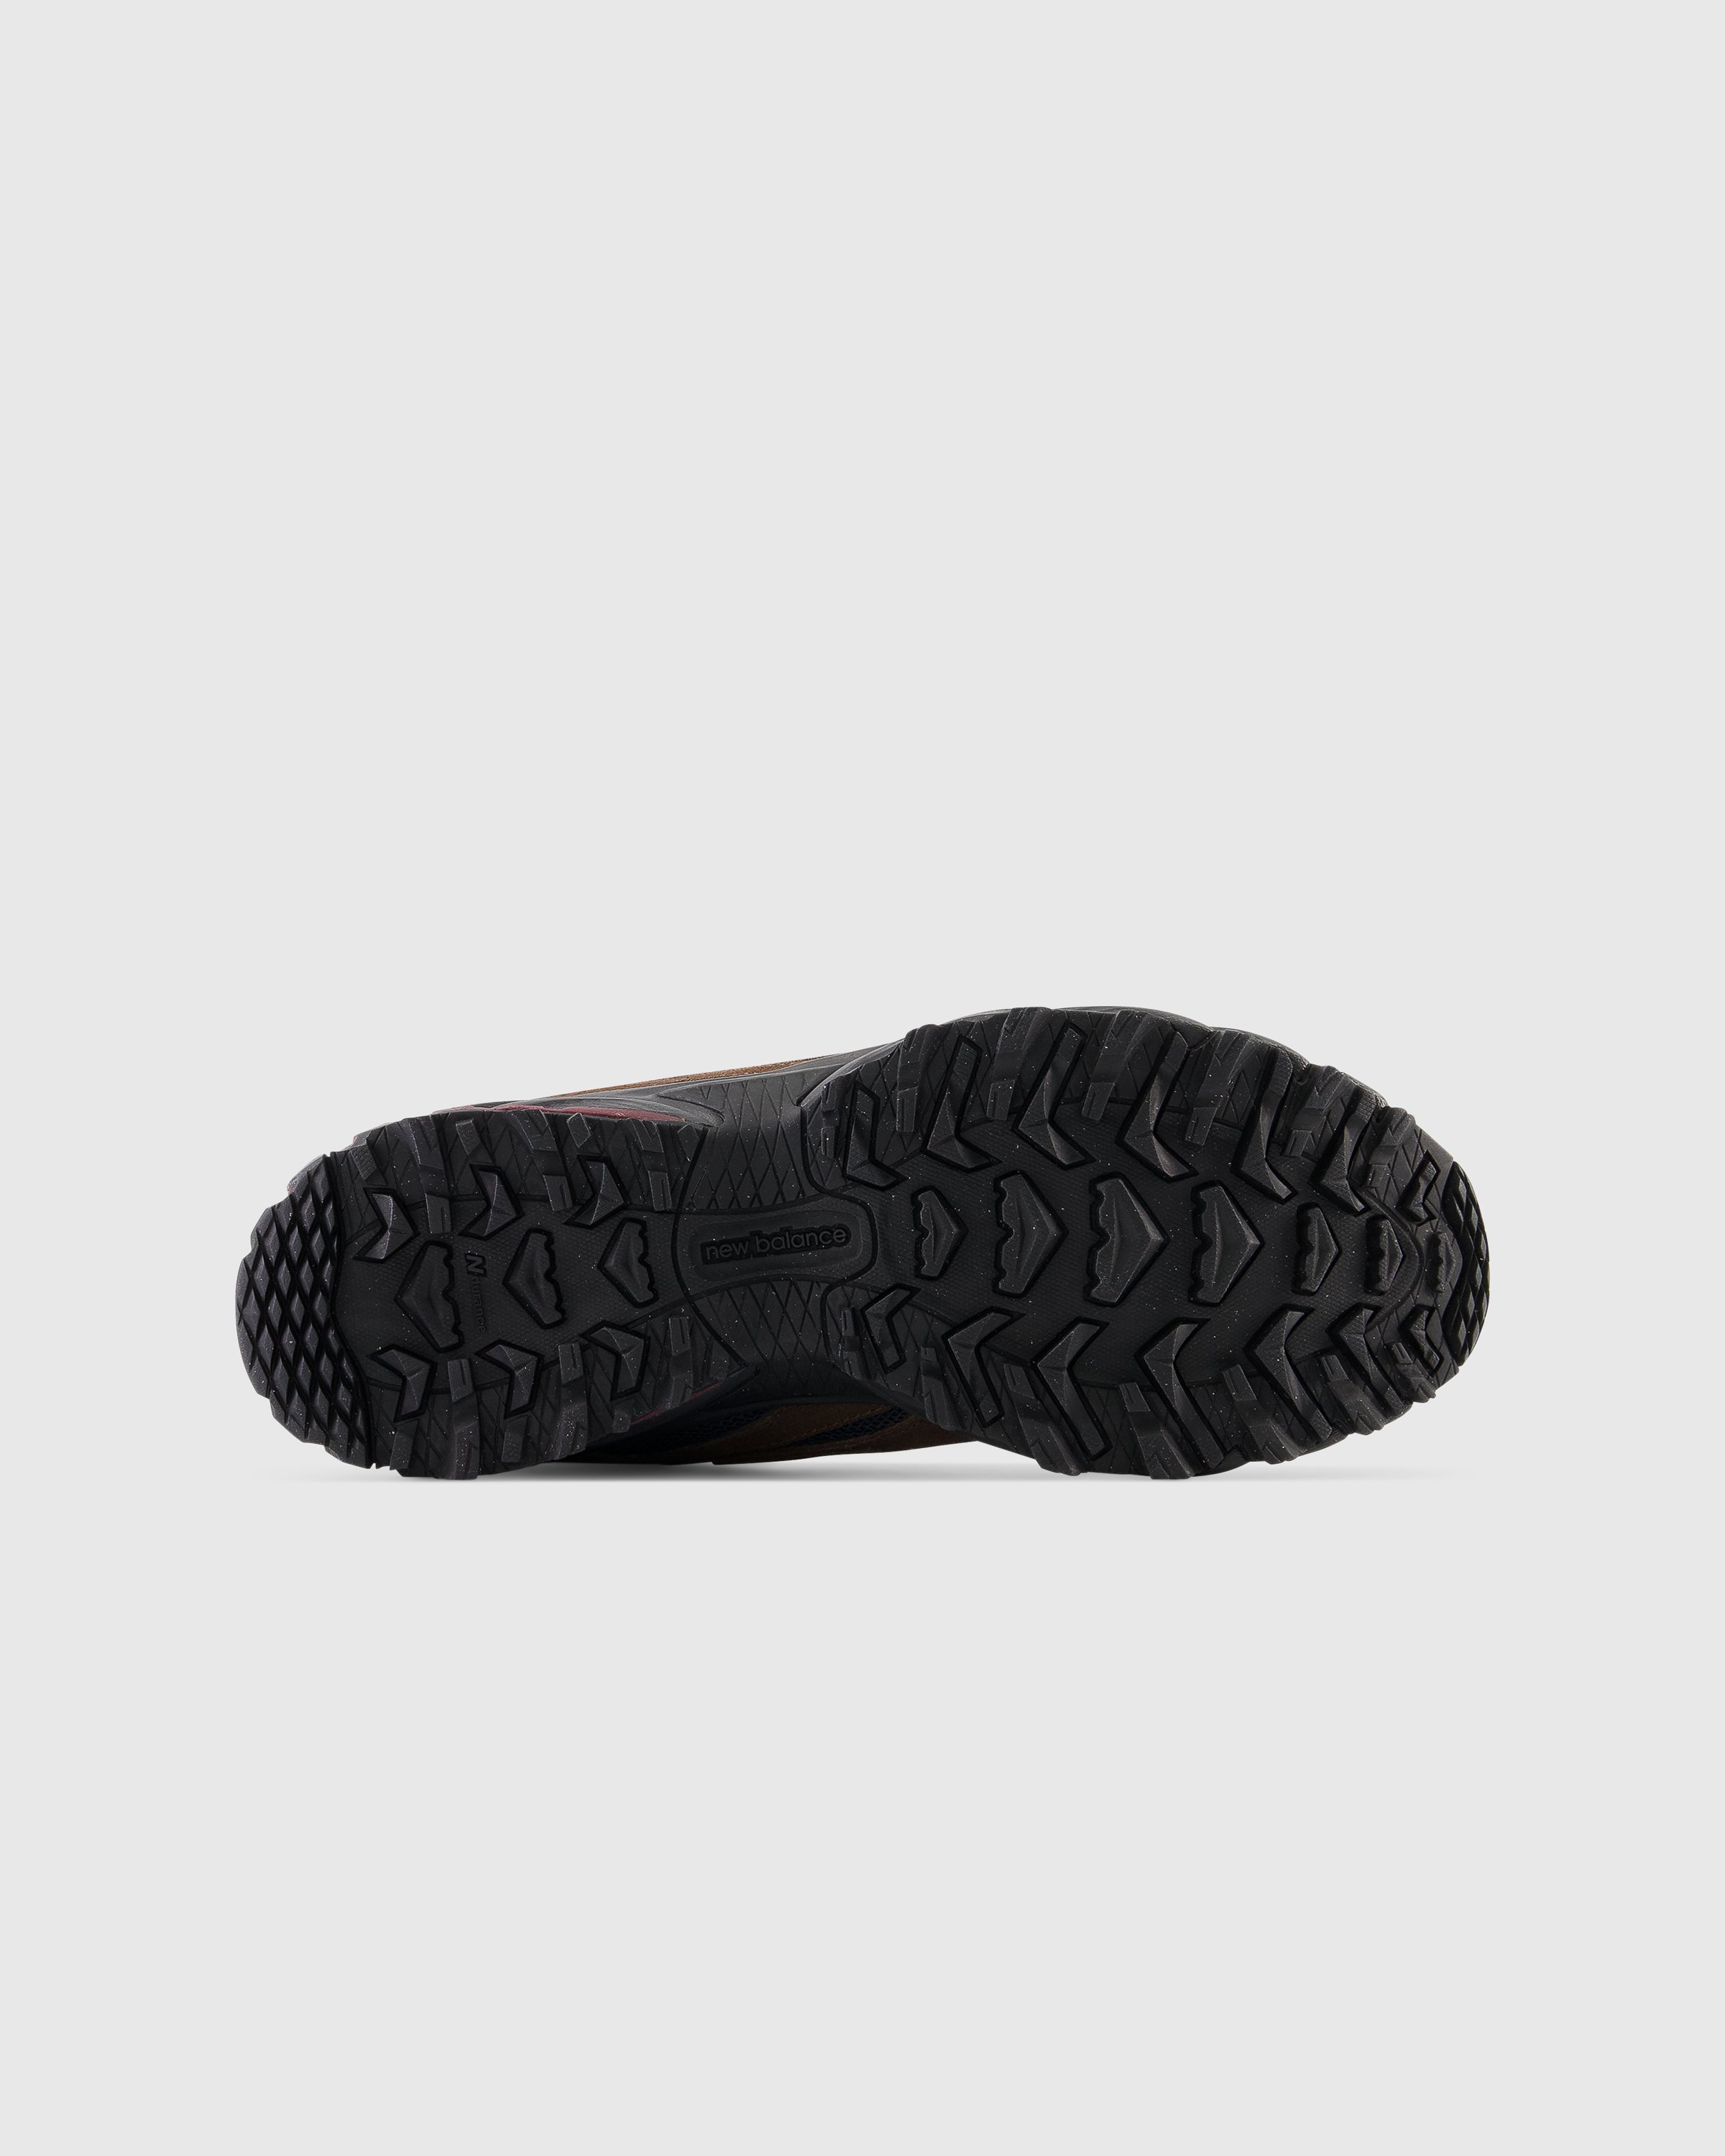 New Balance - ML610TBI Dark Mushroom - Footwear - Brown - Image 6